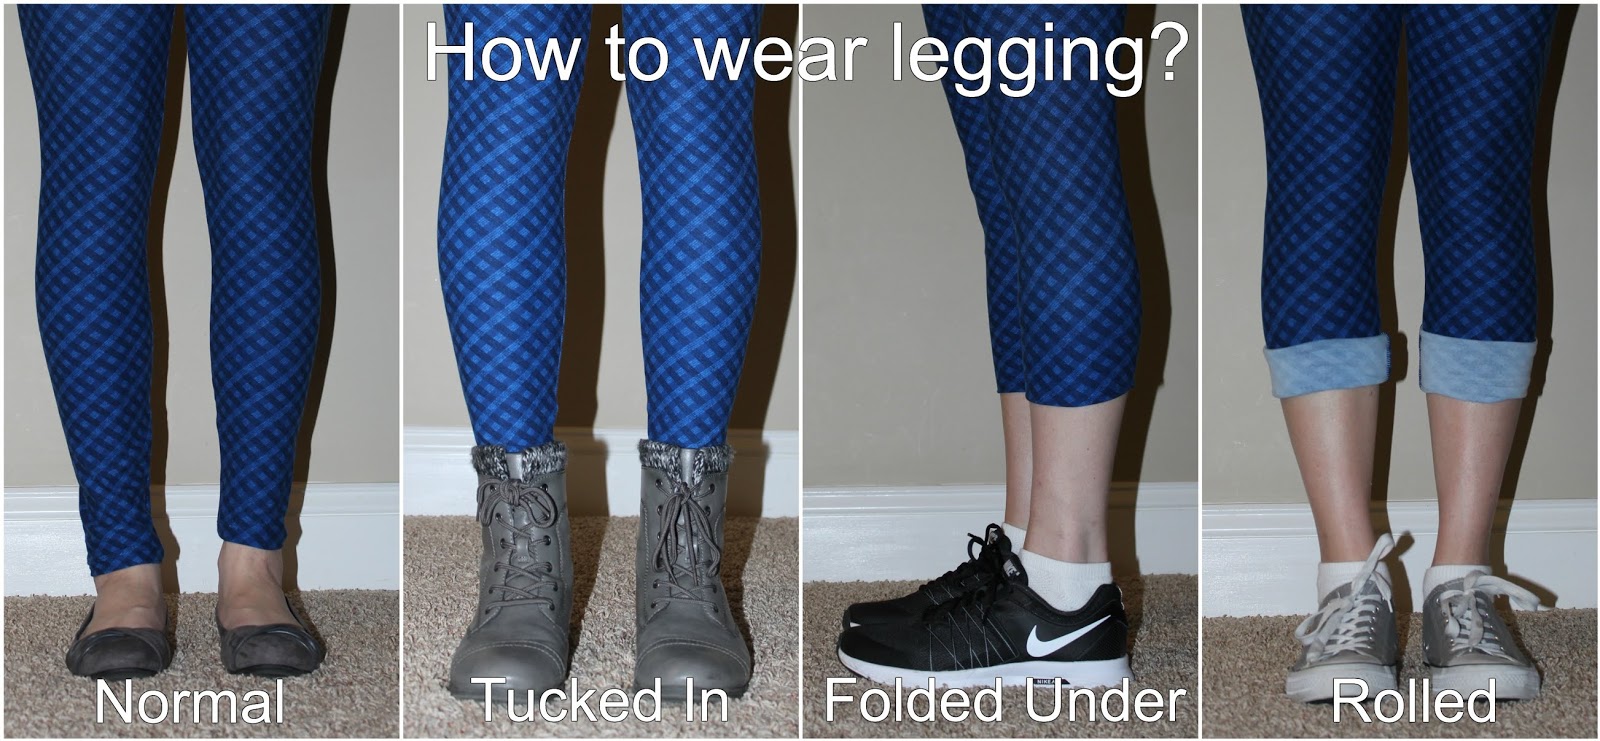 LulaRoe Part 2: Leggings - sizes, styling tips, legging hacks, Q&A